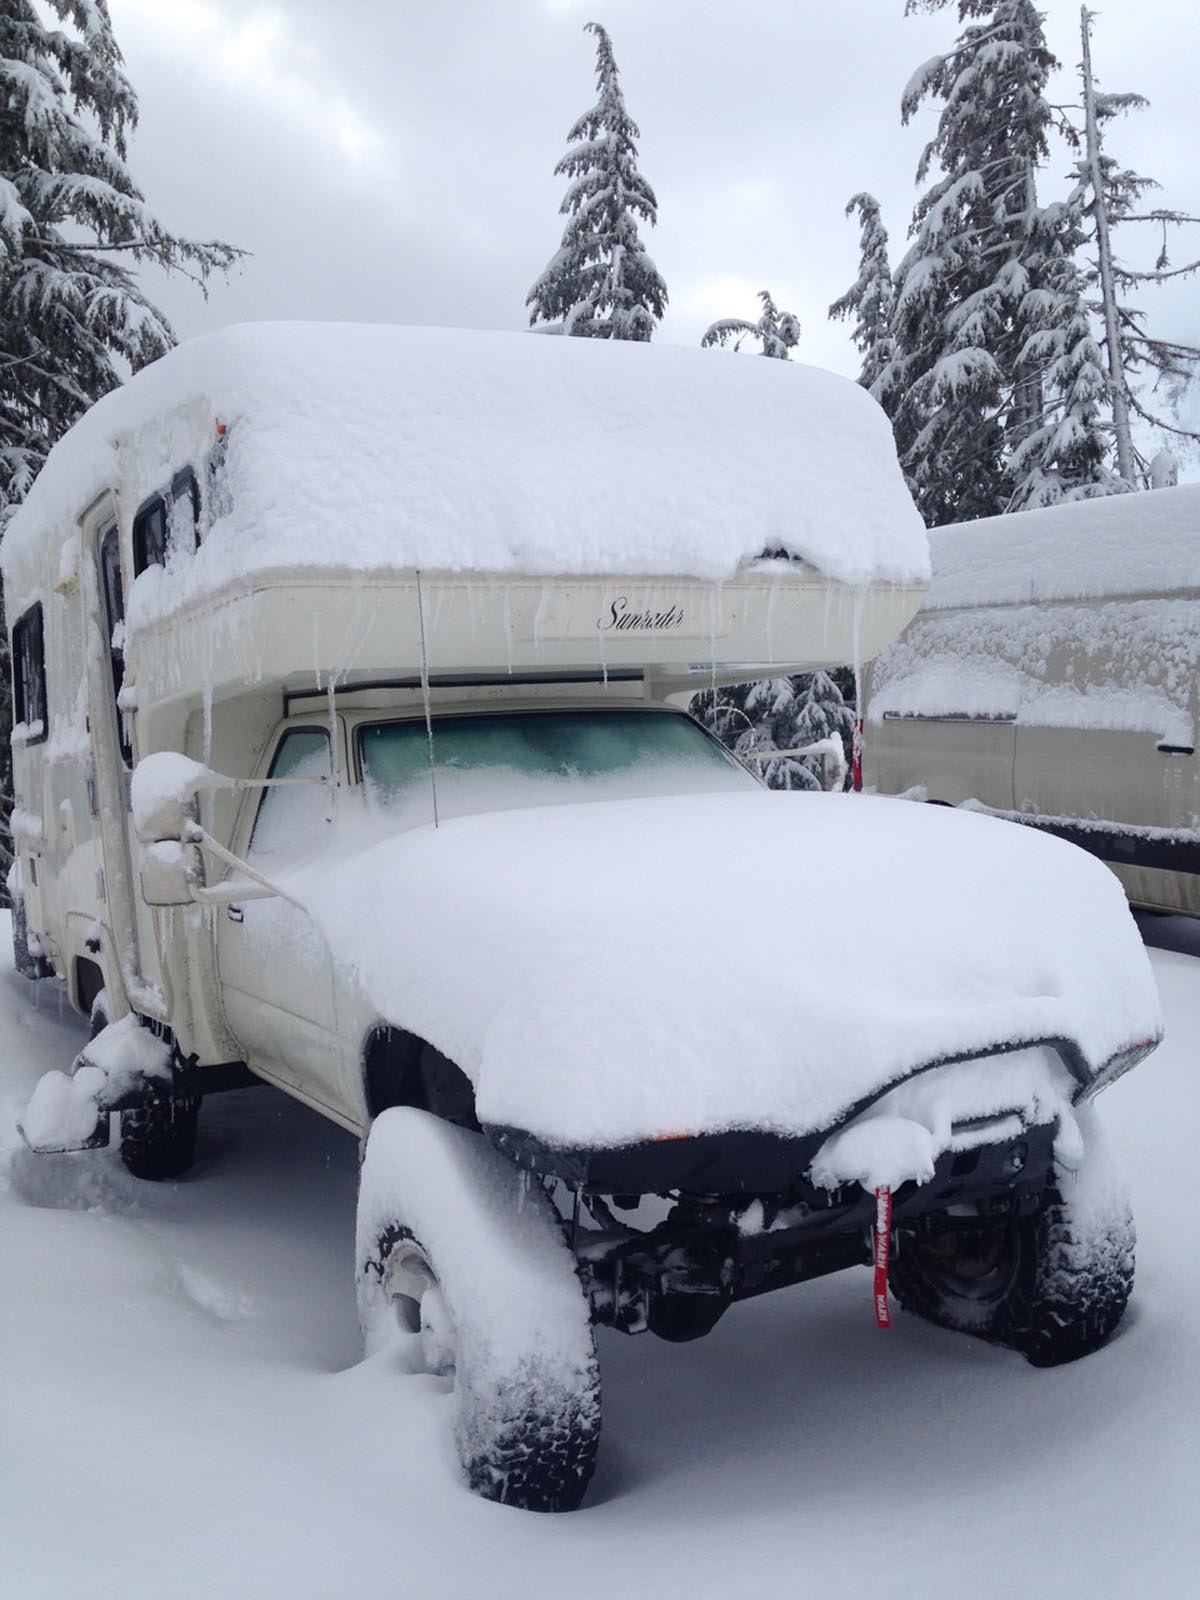 #Vanlife: Kurt Gensheimer shows us his epic Toyota Sunrader & 4WD conversion in snow